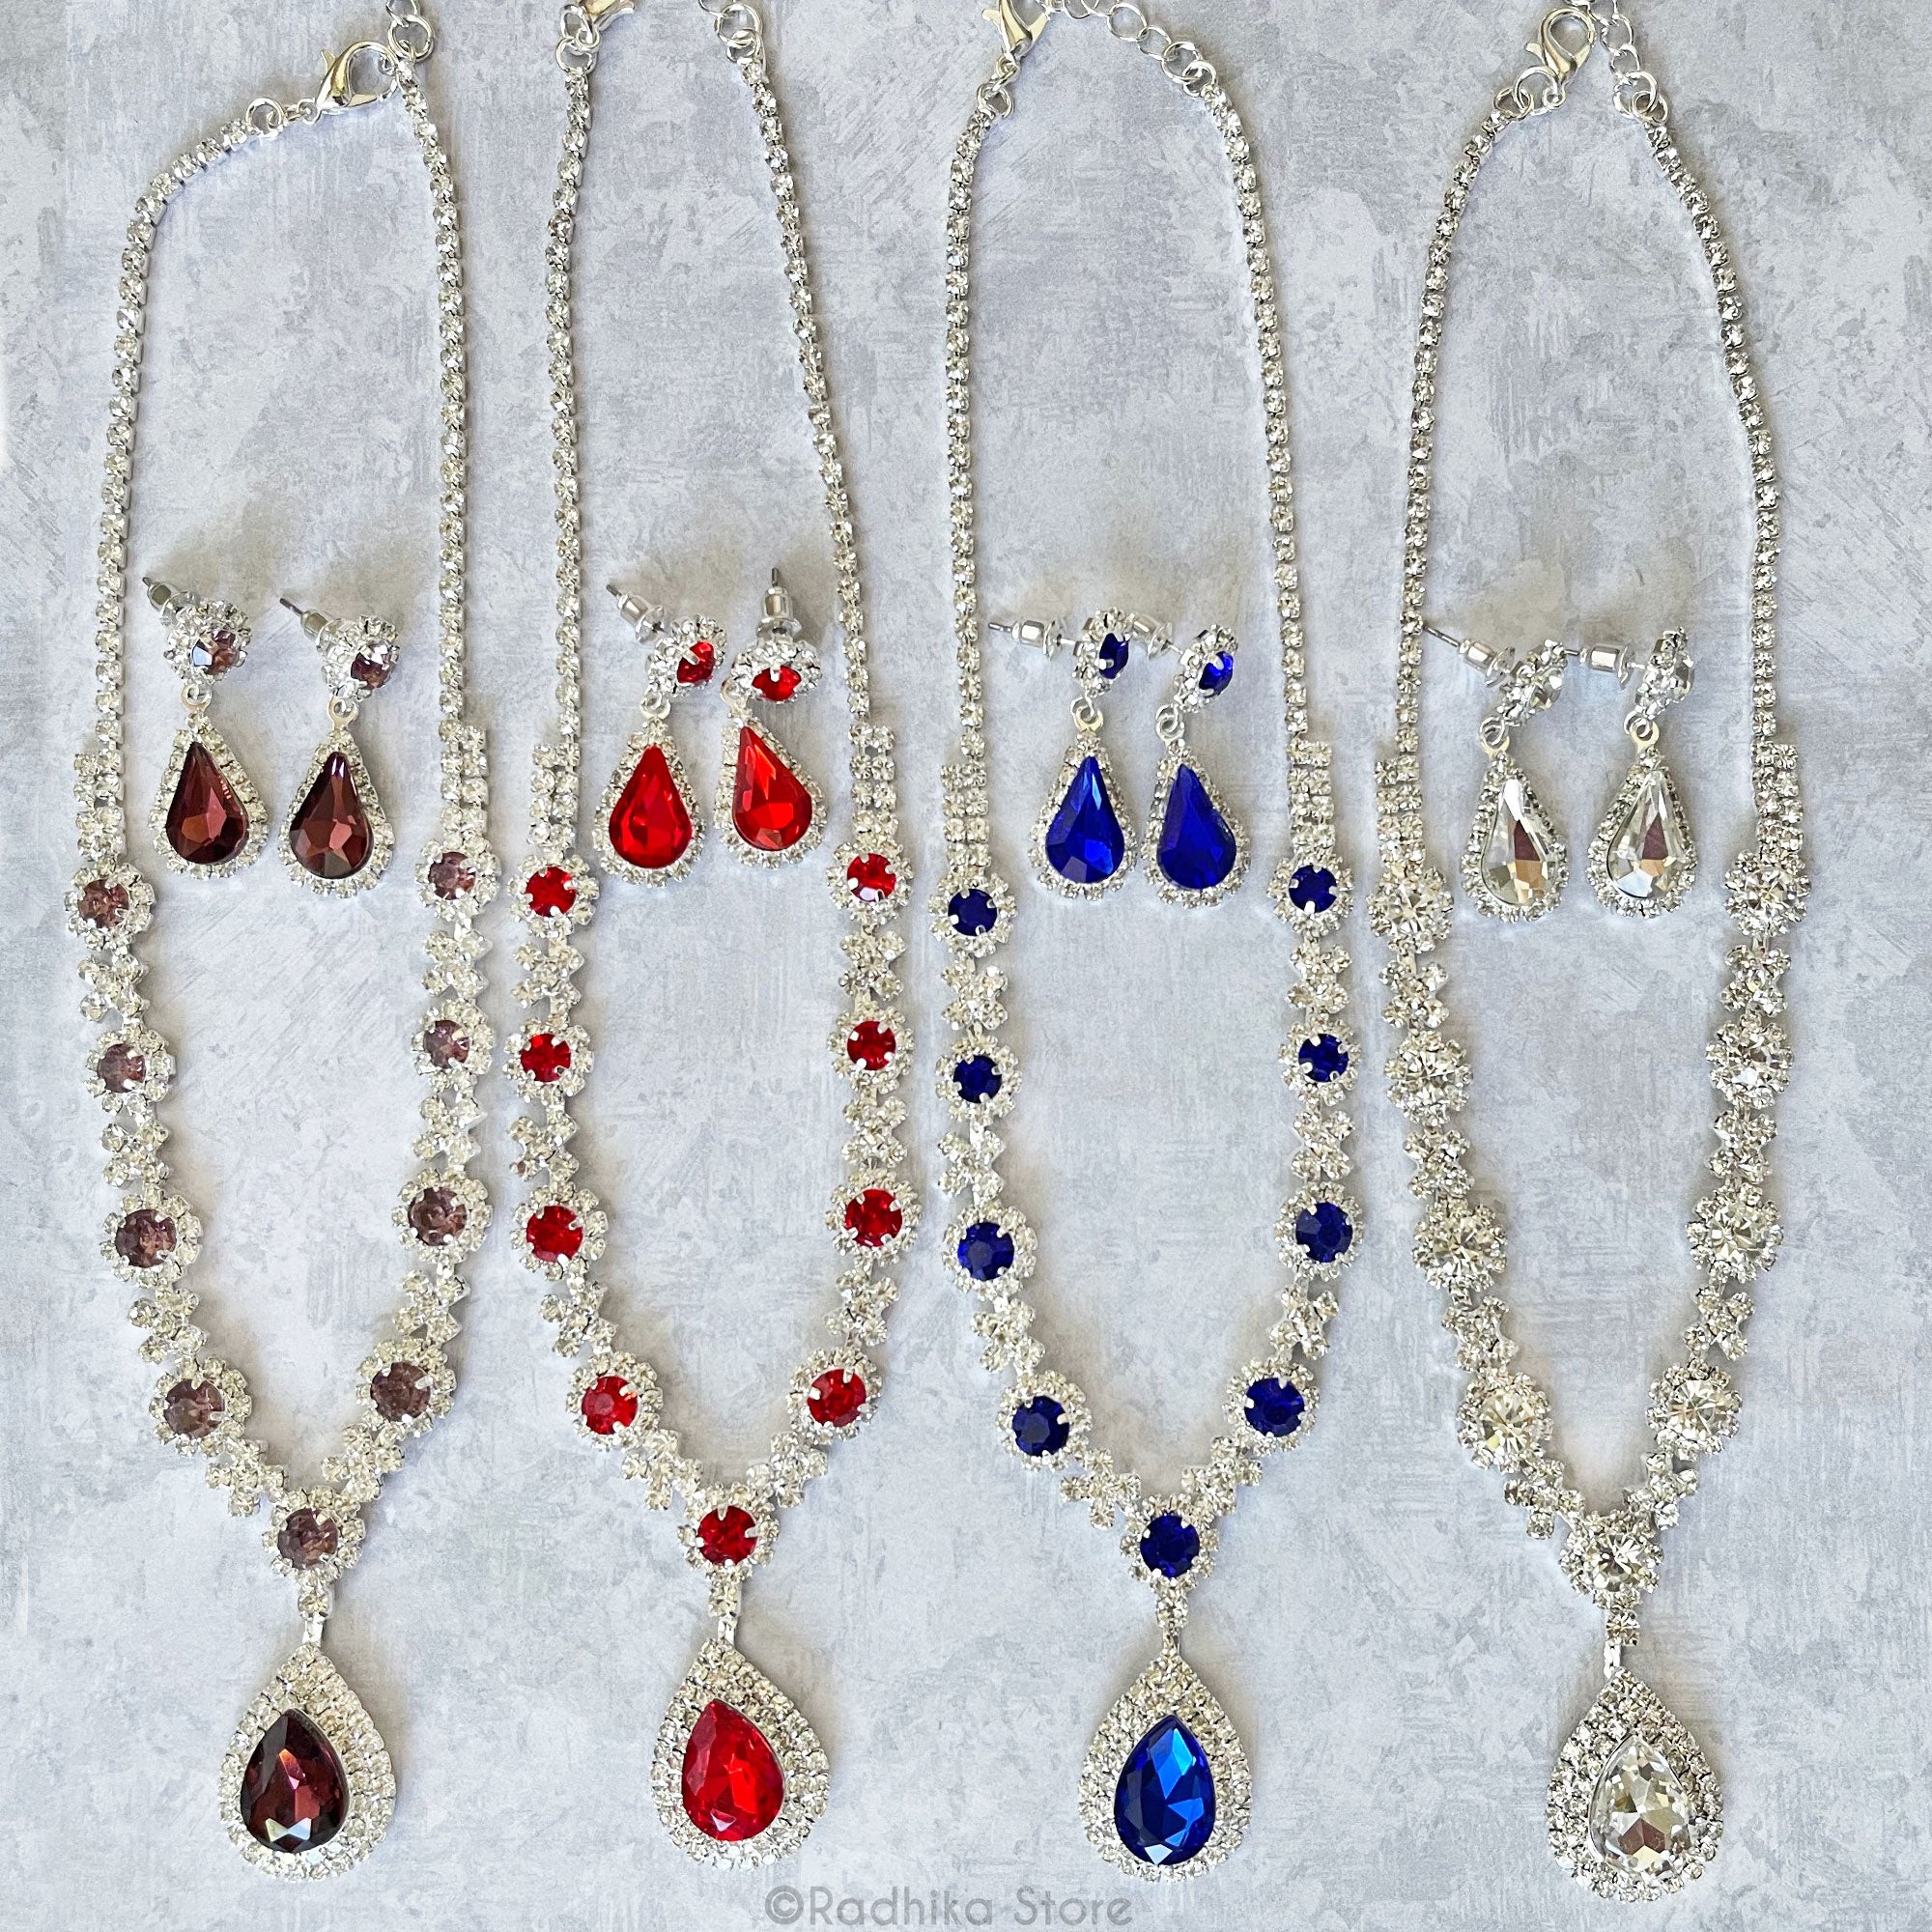 Dew Drop Flowers - Rhinestone Deity Necklace And Earring Set